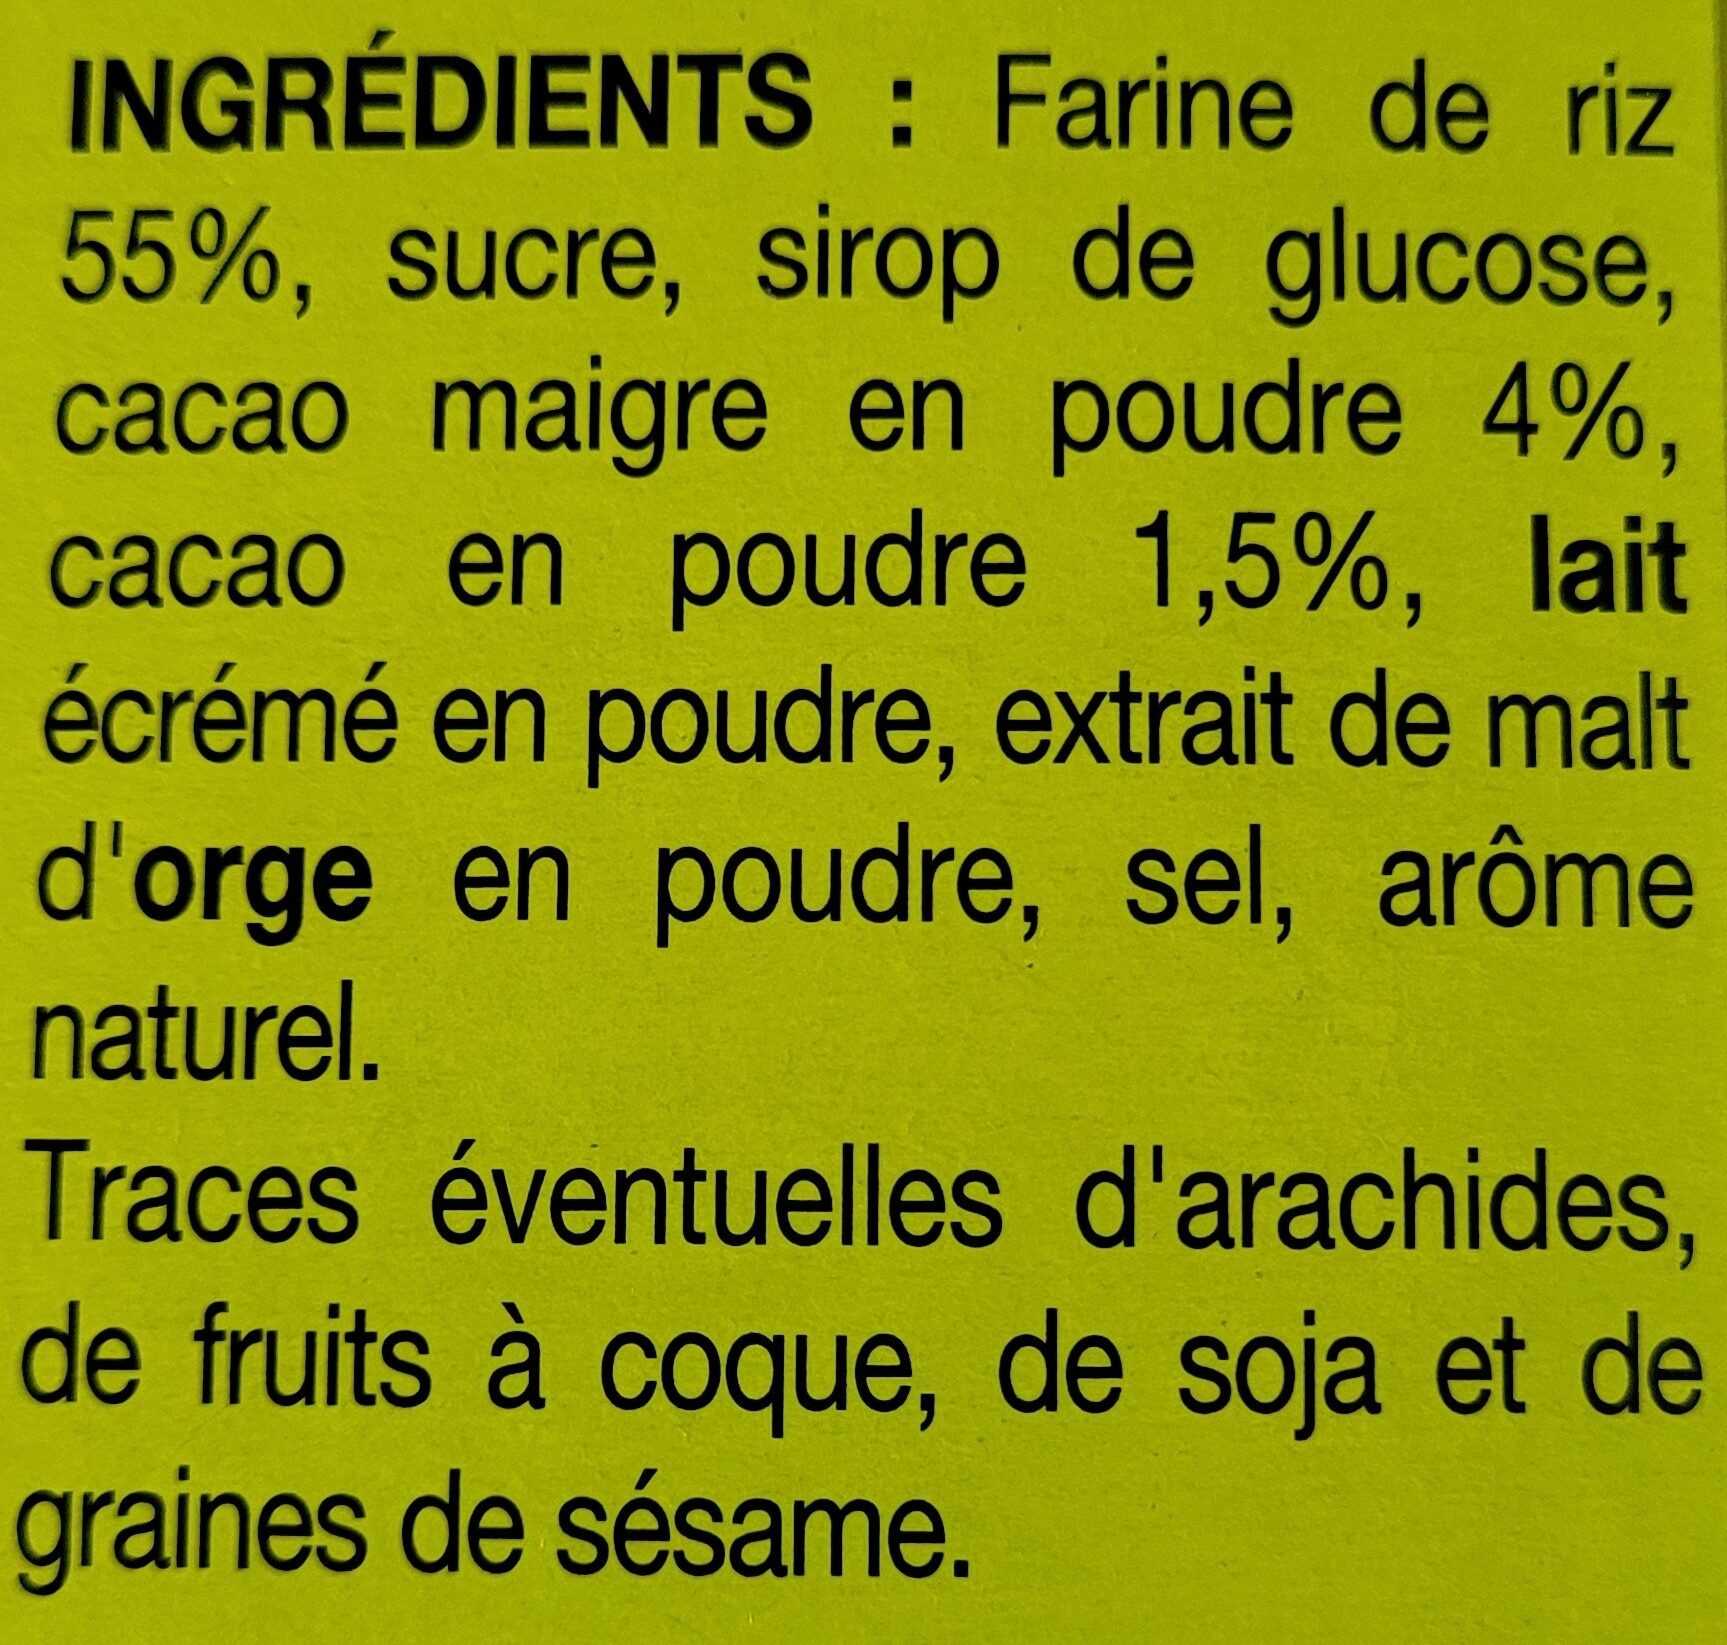 Riz soufflé saveur chocolat - Ingredients - fr